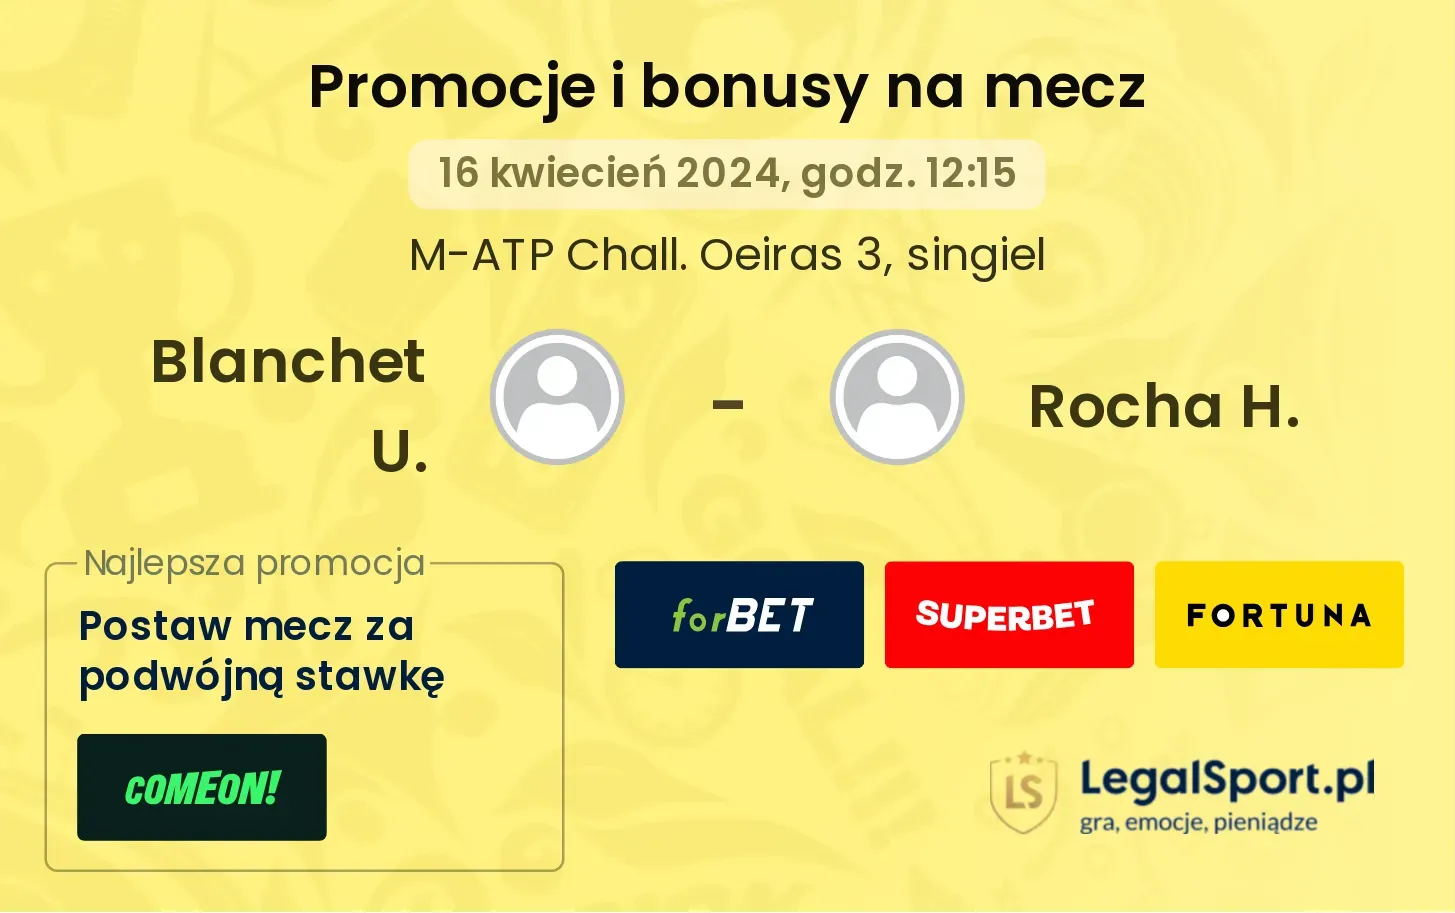 Blanchet U. - Rocha H. promocje bonusy na mecz